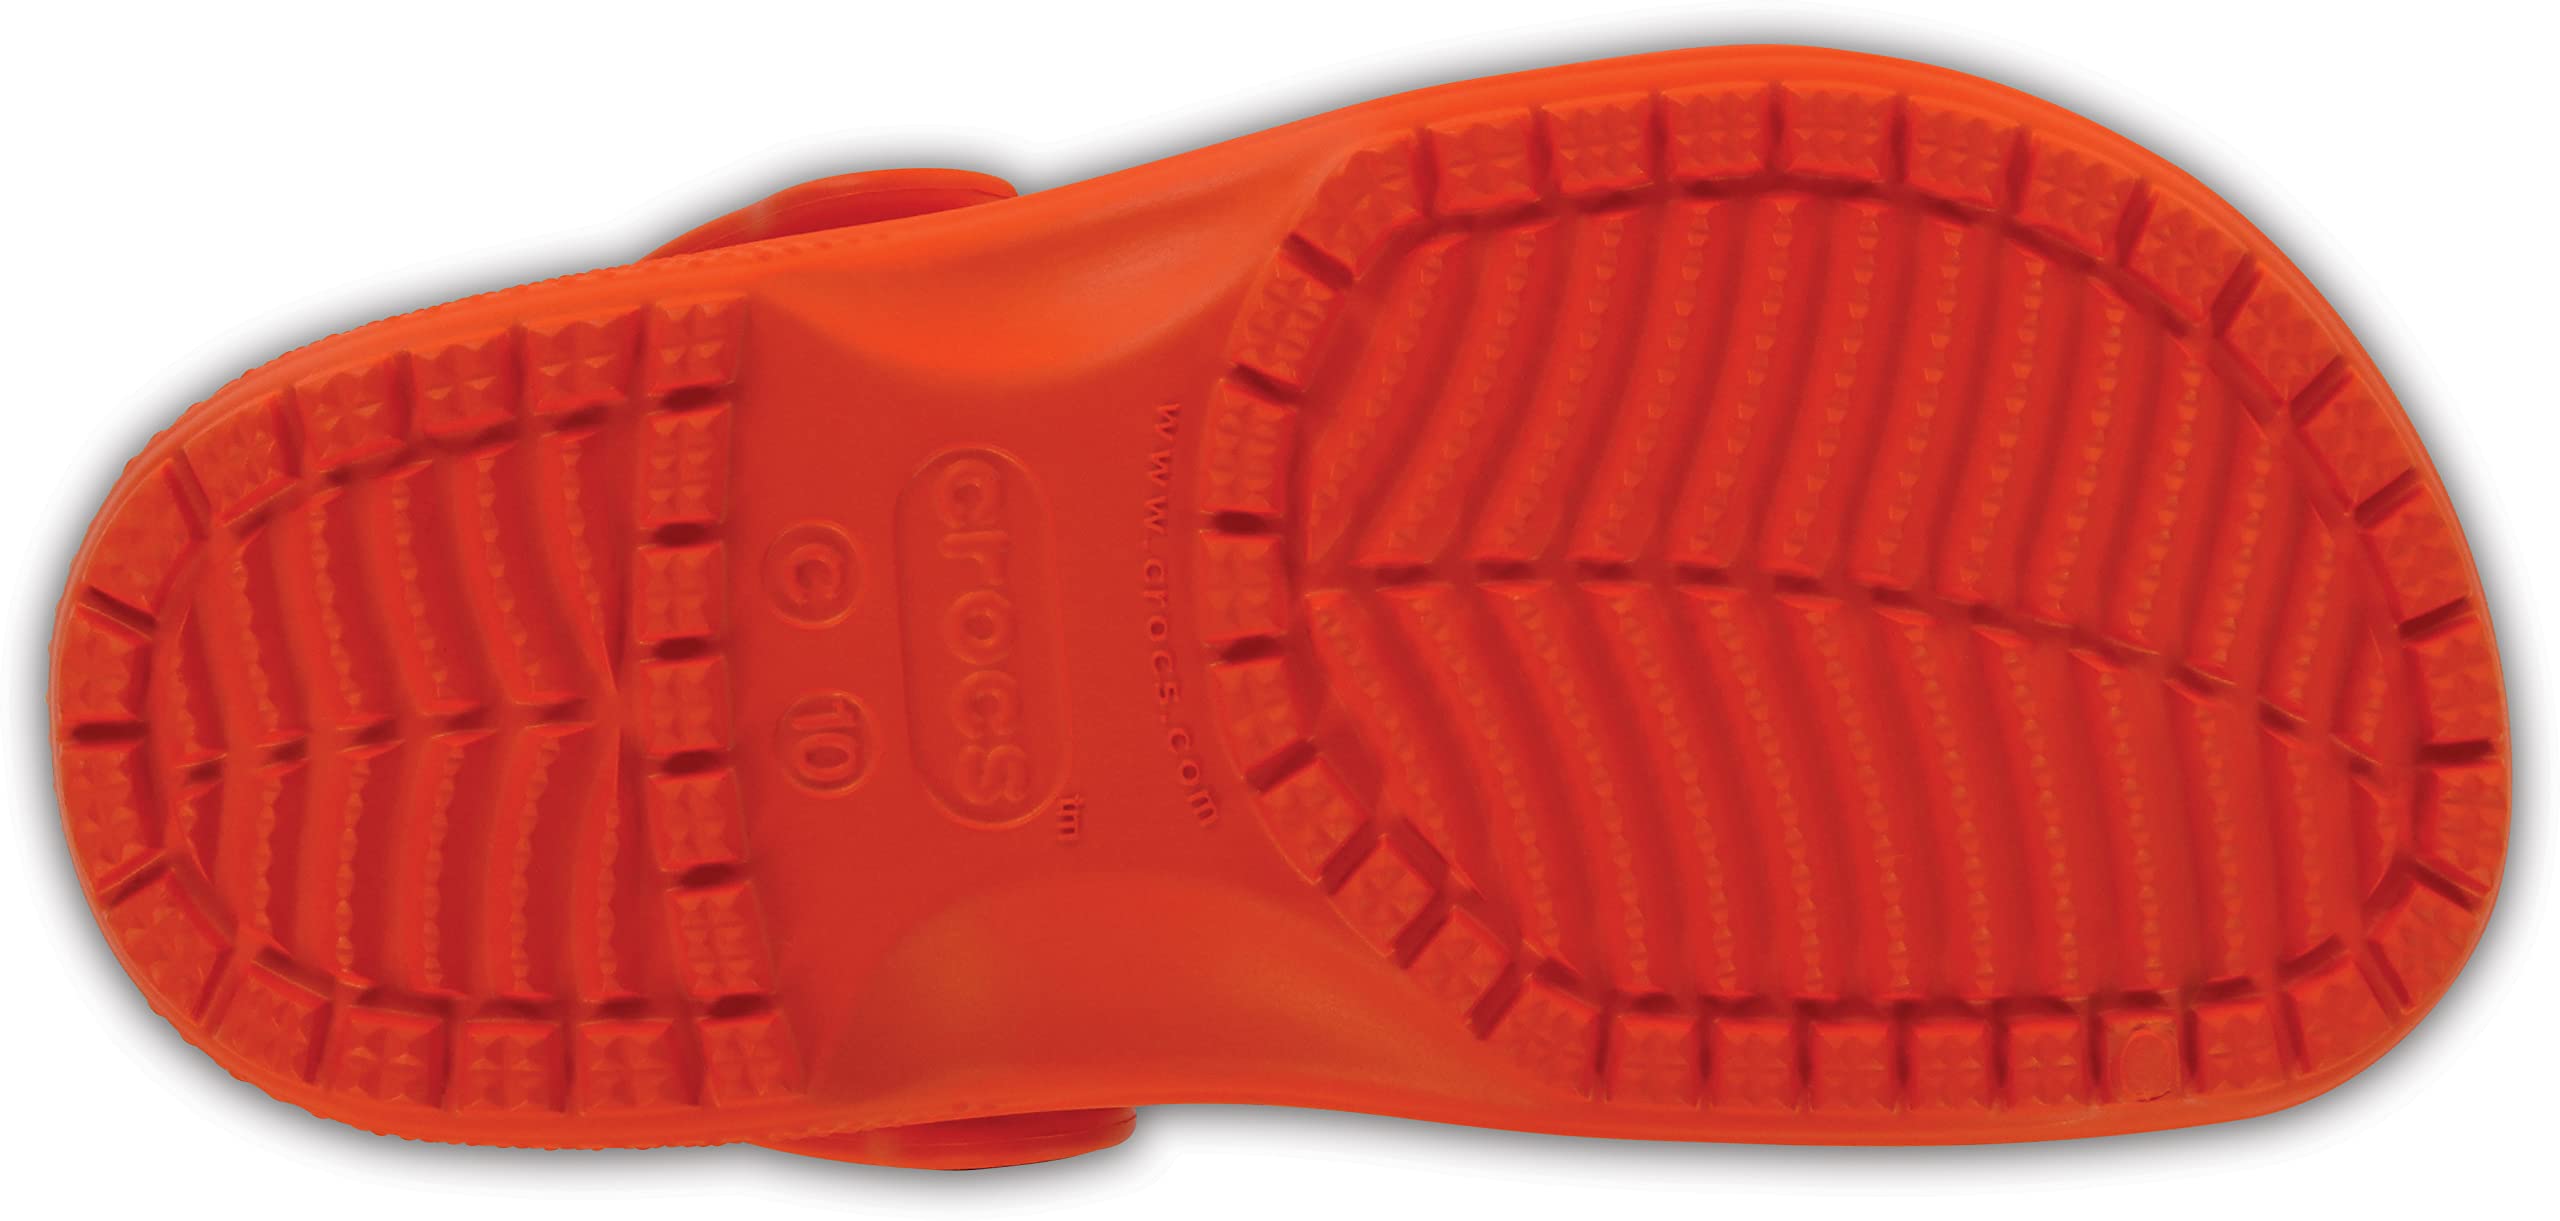 Crocs Kids' Classic Clog, Tangerine, J2 US Little Kid